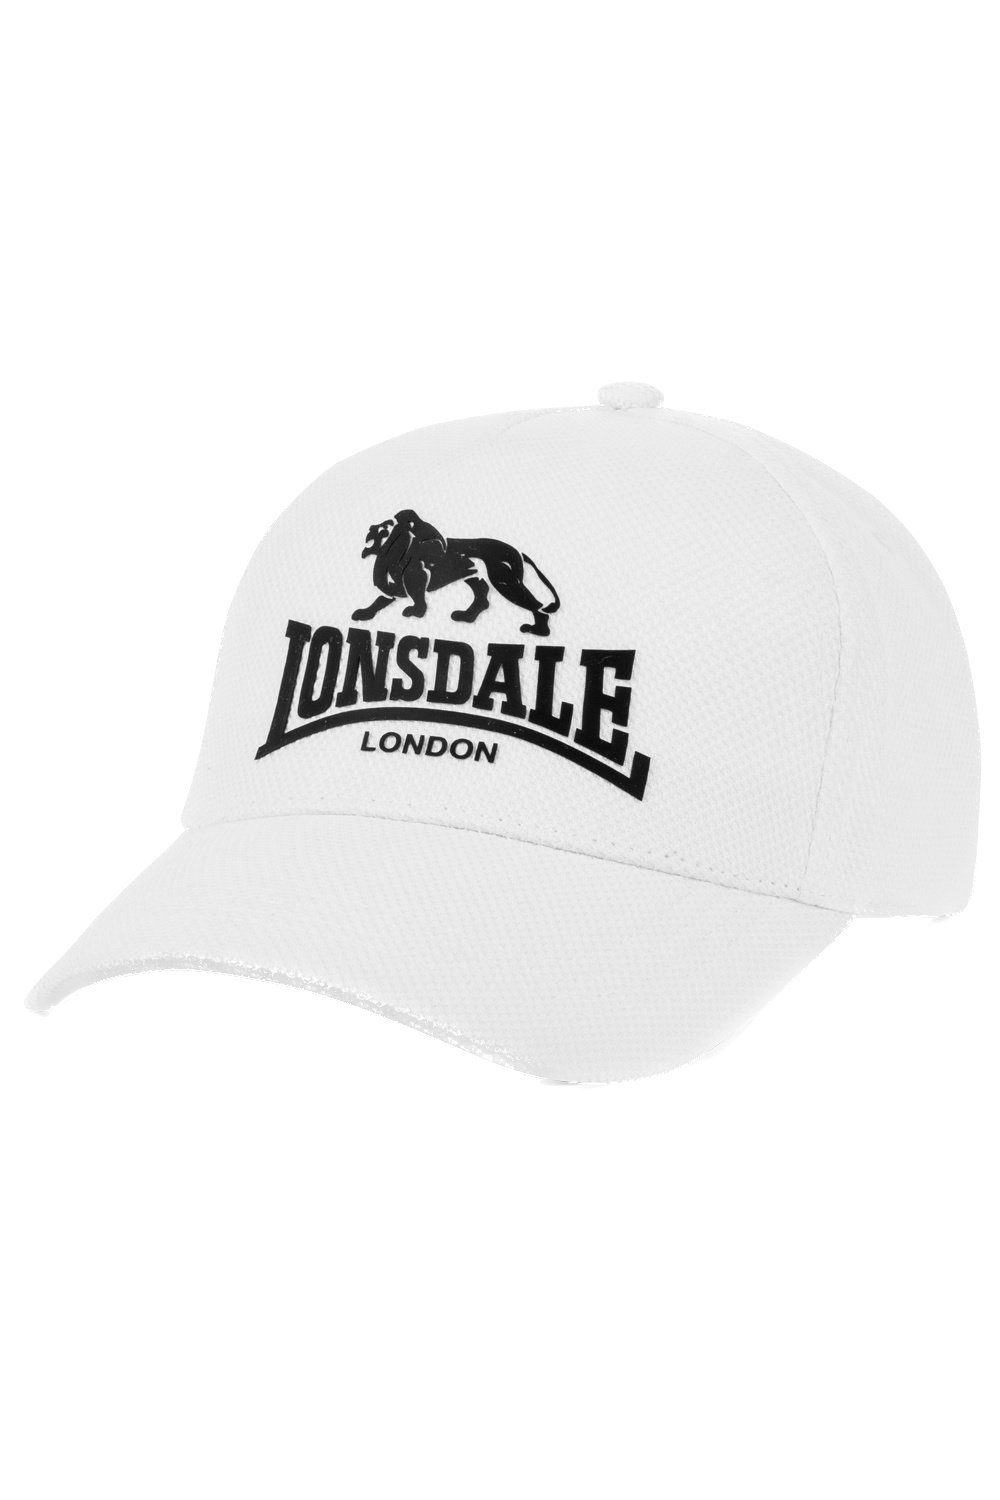 Lonsdale Baseball BECKBURY Cap Unisex Cap white/black Lonsdale